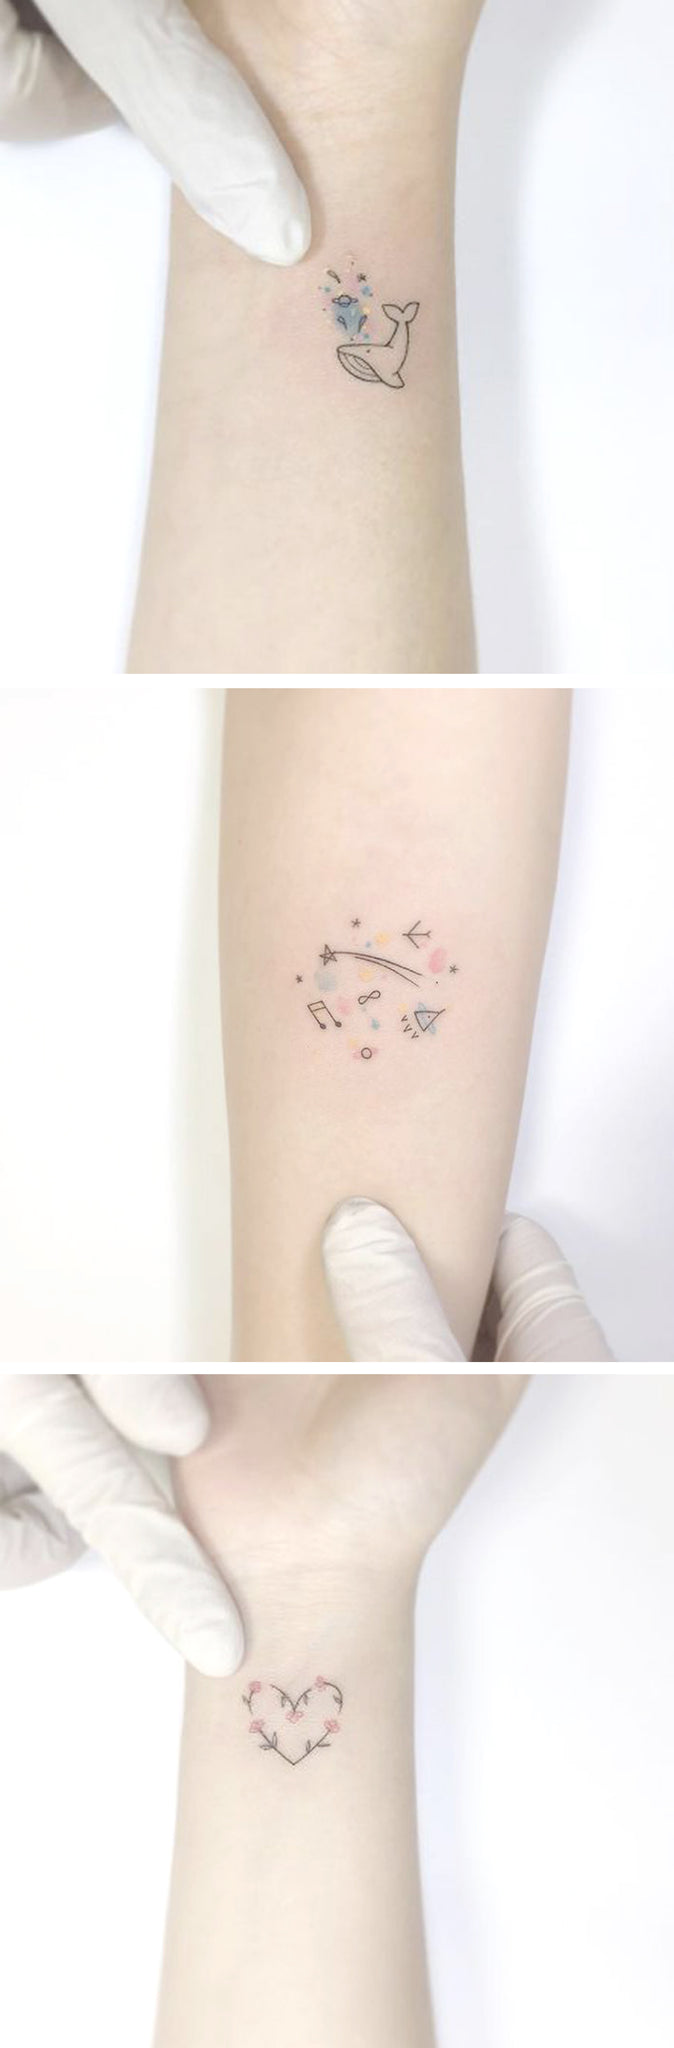 Small Cute Watercolor Tattoo Ideas - Wrist Tatouage Floral Flower Heart - Minimalistic Ideas Del Tatuaje - www.MyBodiArt.com 